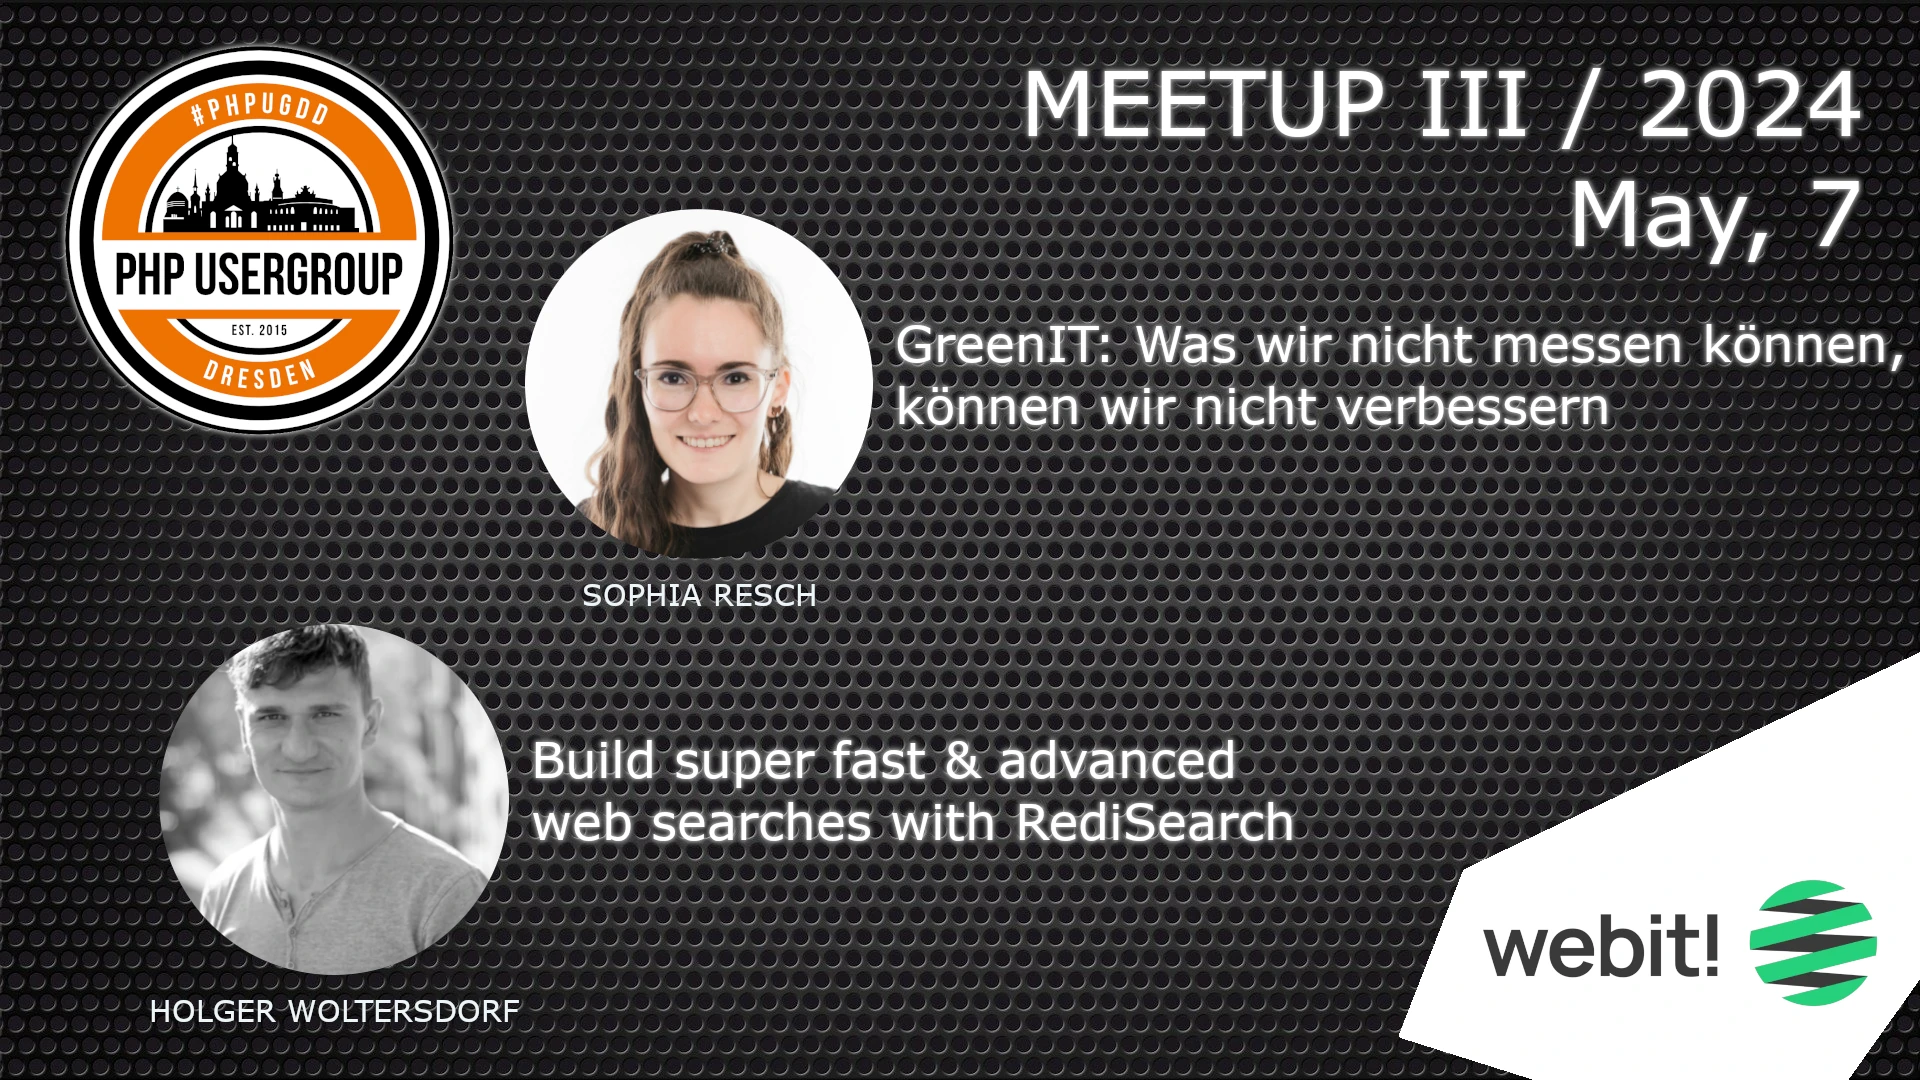 PHPUGDD Meetup III/2024,May 7, Speakers: Sophia Resch, Topic: GreenIT & Speakers: Holger Woltersdorf, Topic: RediSearch